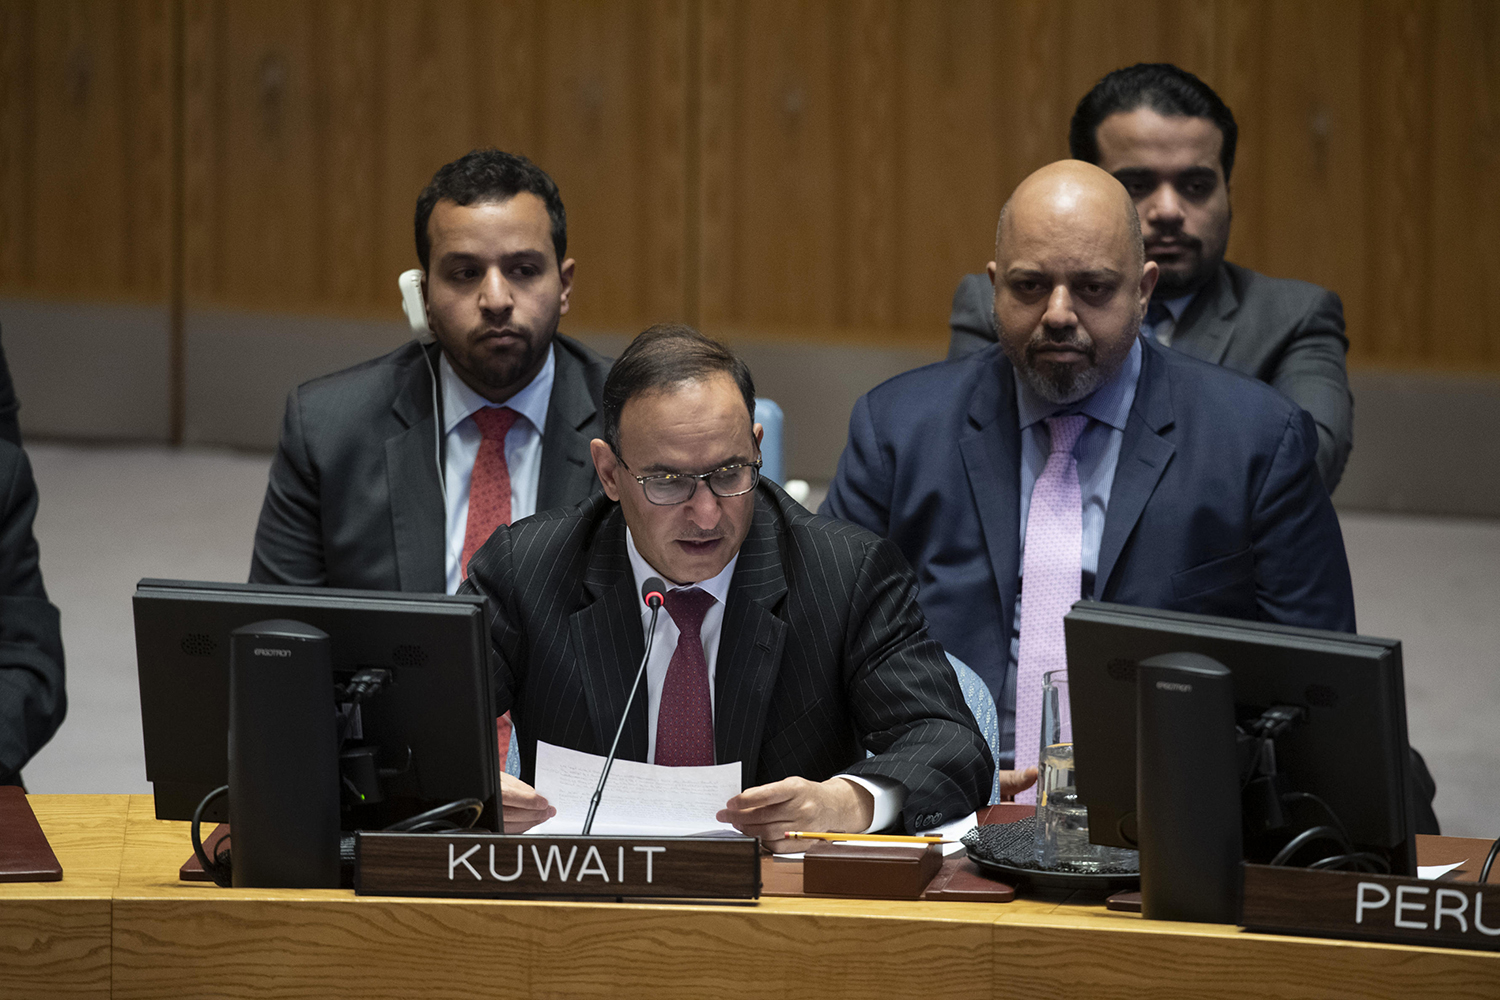 Kuwait's Permanent Representative at the UN